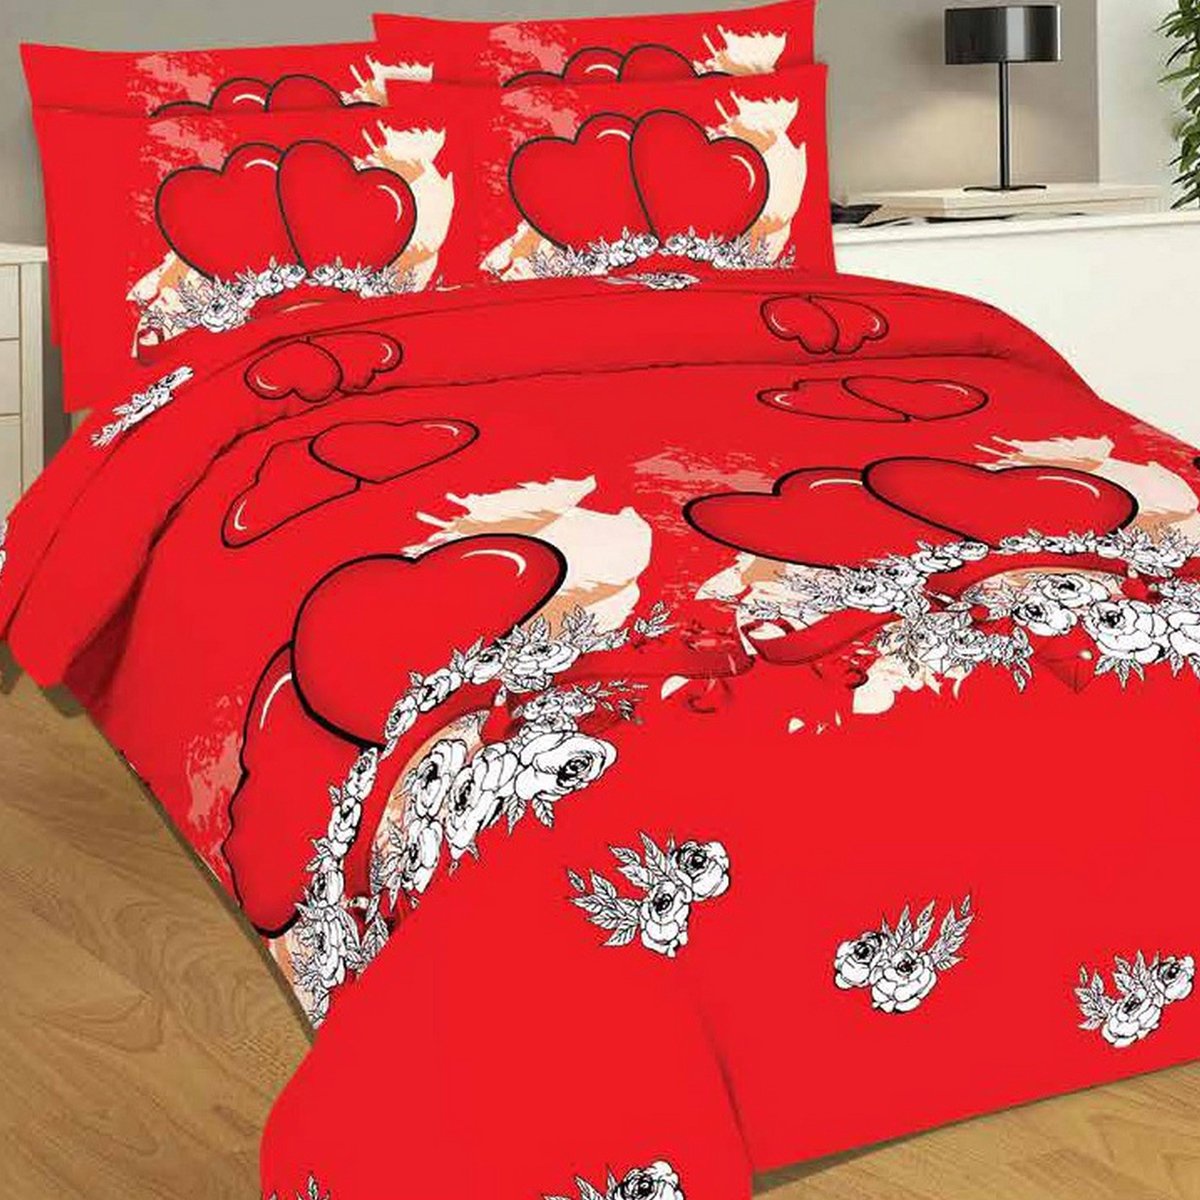 Bravo Single Comforter 3pcs Set Couple